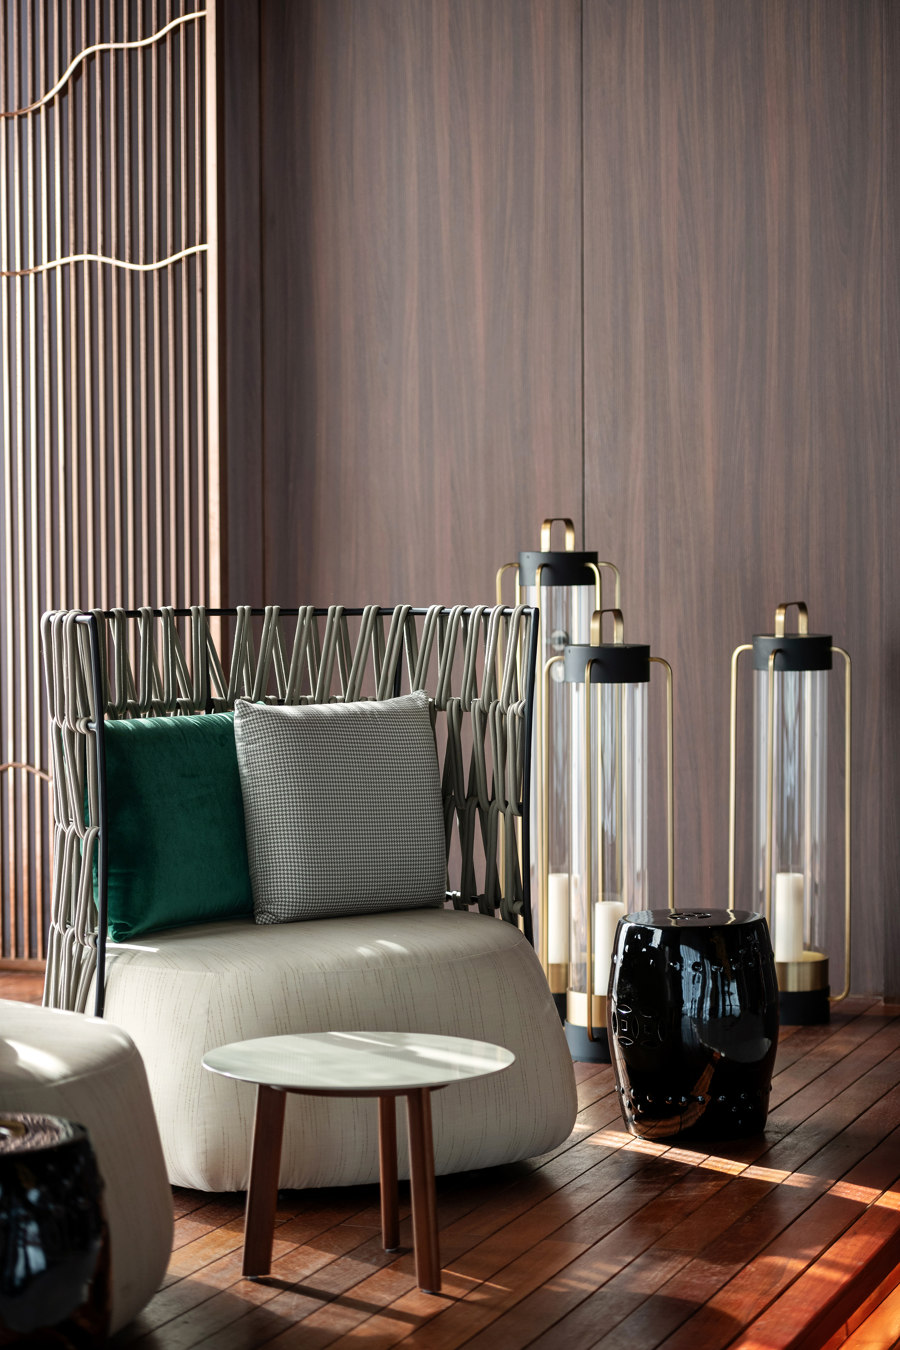 Raffles Hotel by LW Design group | Hotel interiors